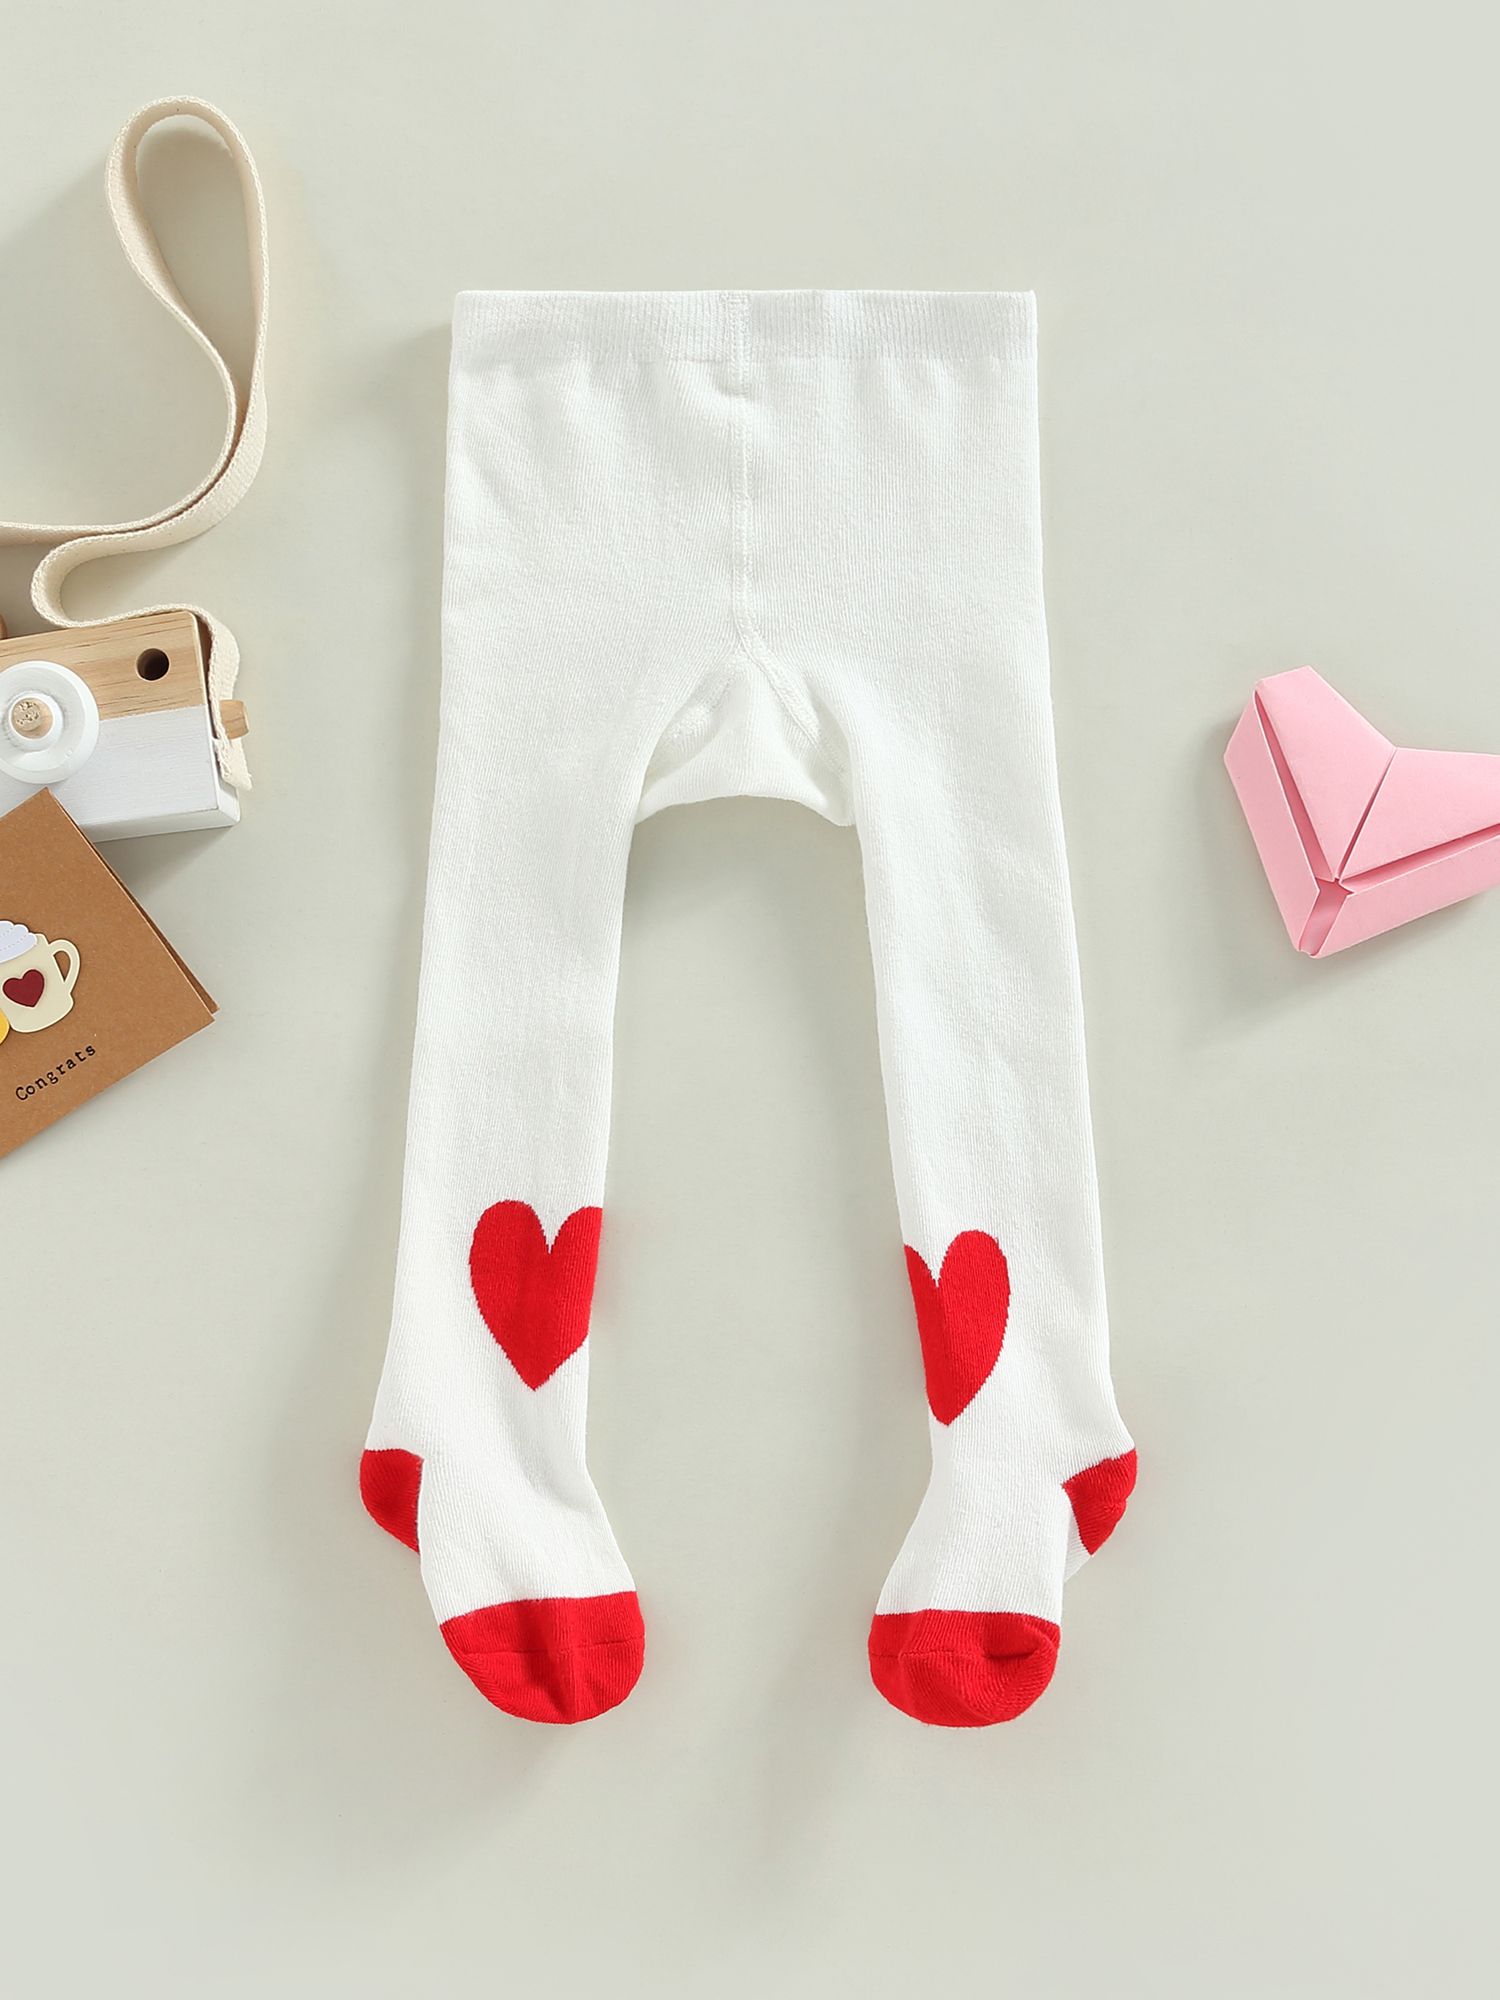 Peyakidsaa Baby Tights Toddler Girl Tights Heart Print Leggings Soft Cotton Stockings Pantyhose | Walmart (US)